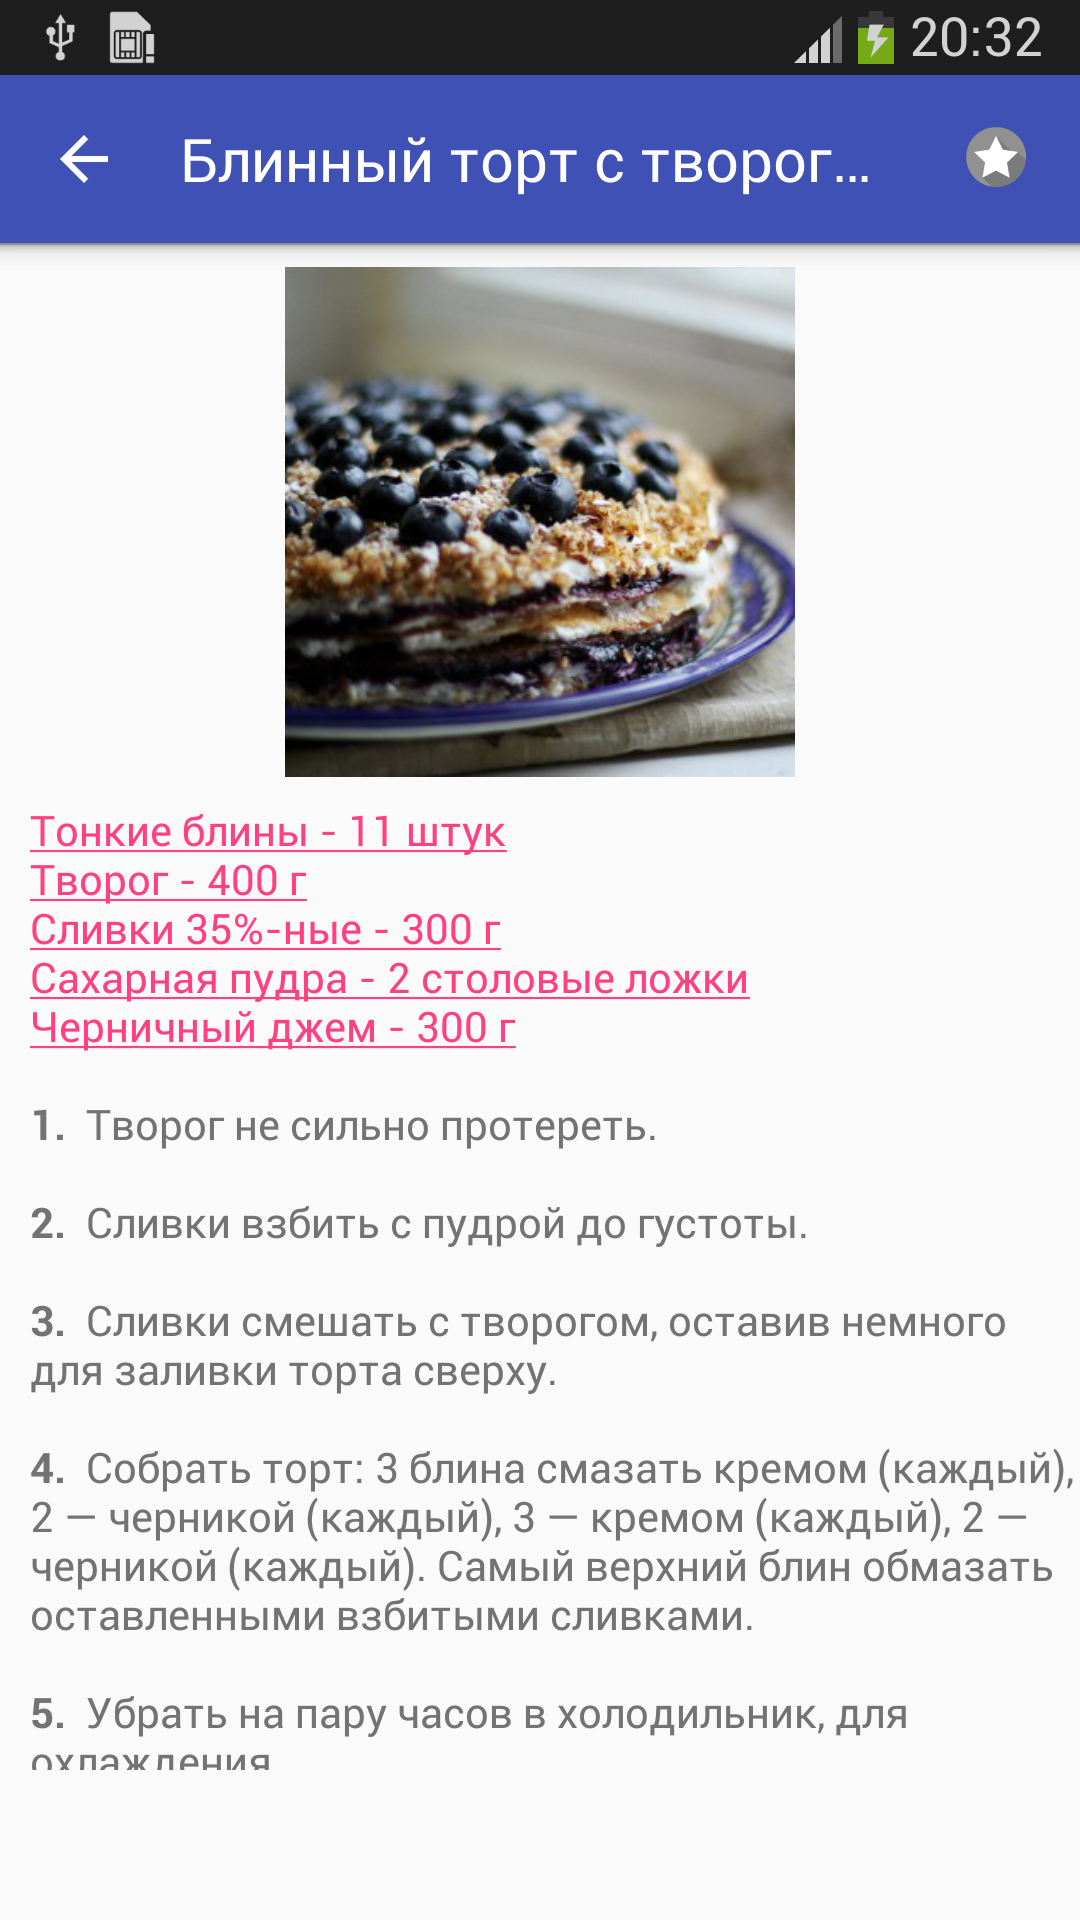 Android application Торты рецепты с фото screenshort